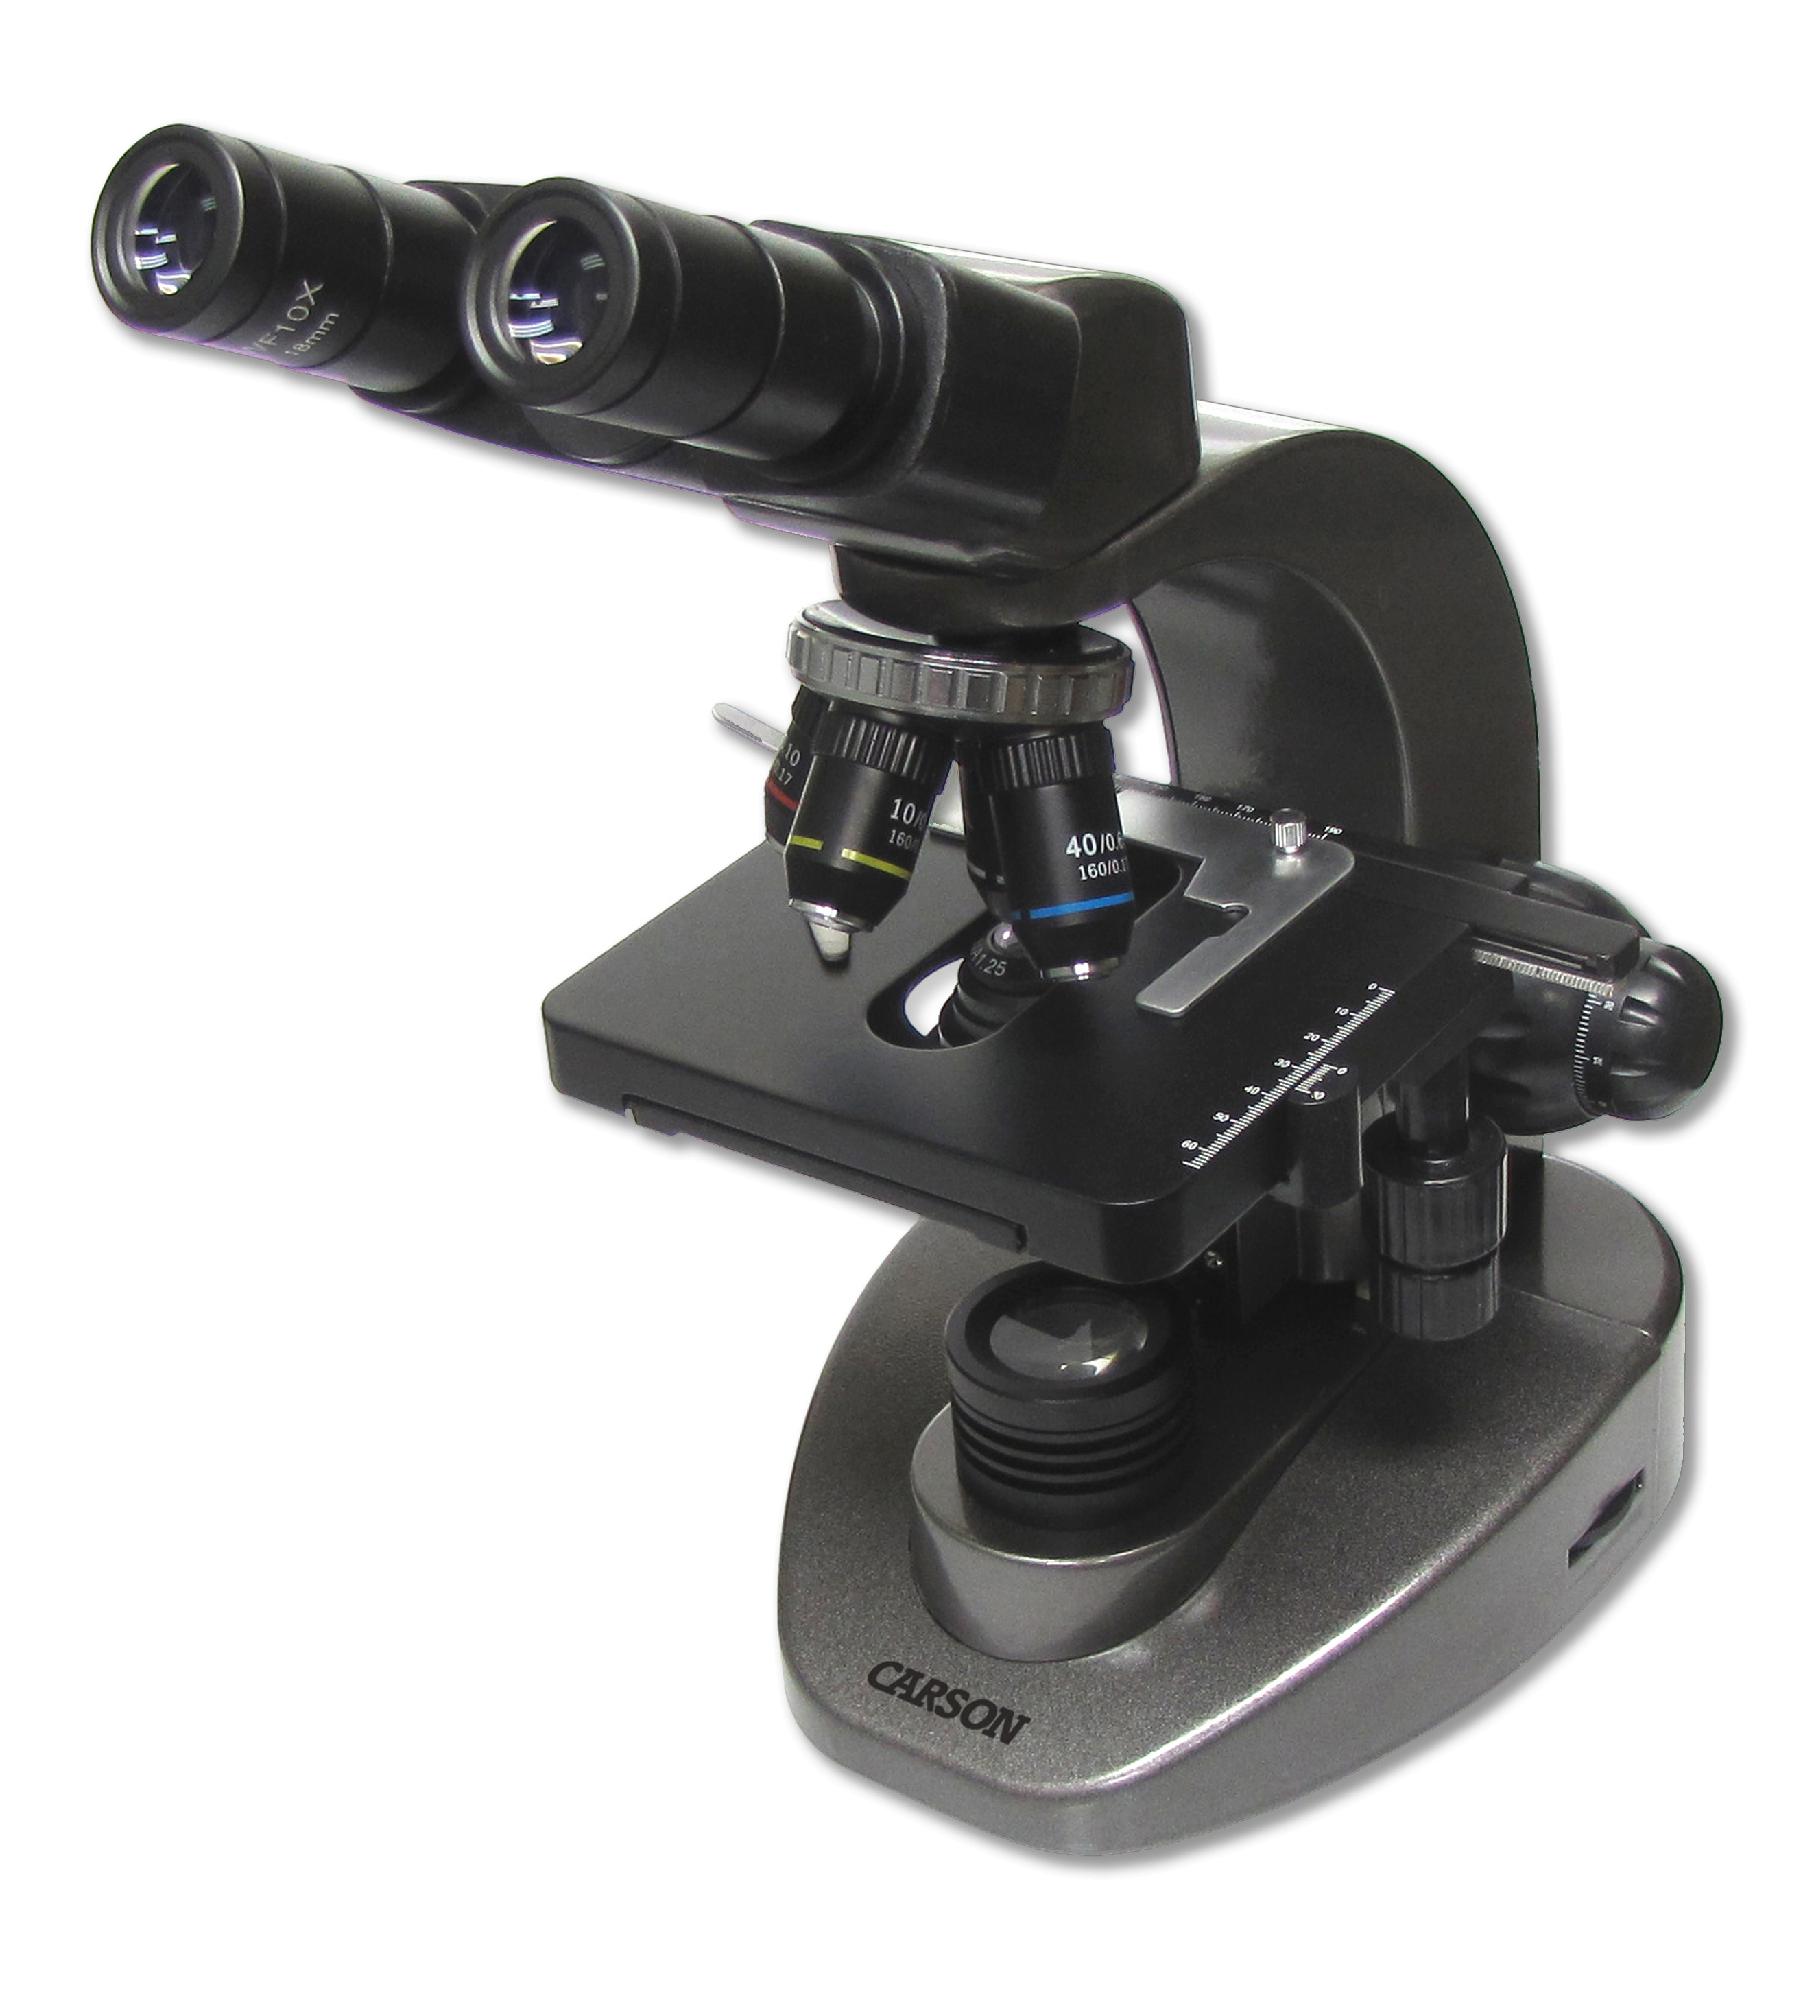 Carson Optical Microscope - MS-160